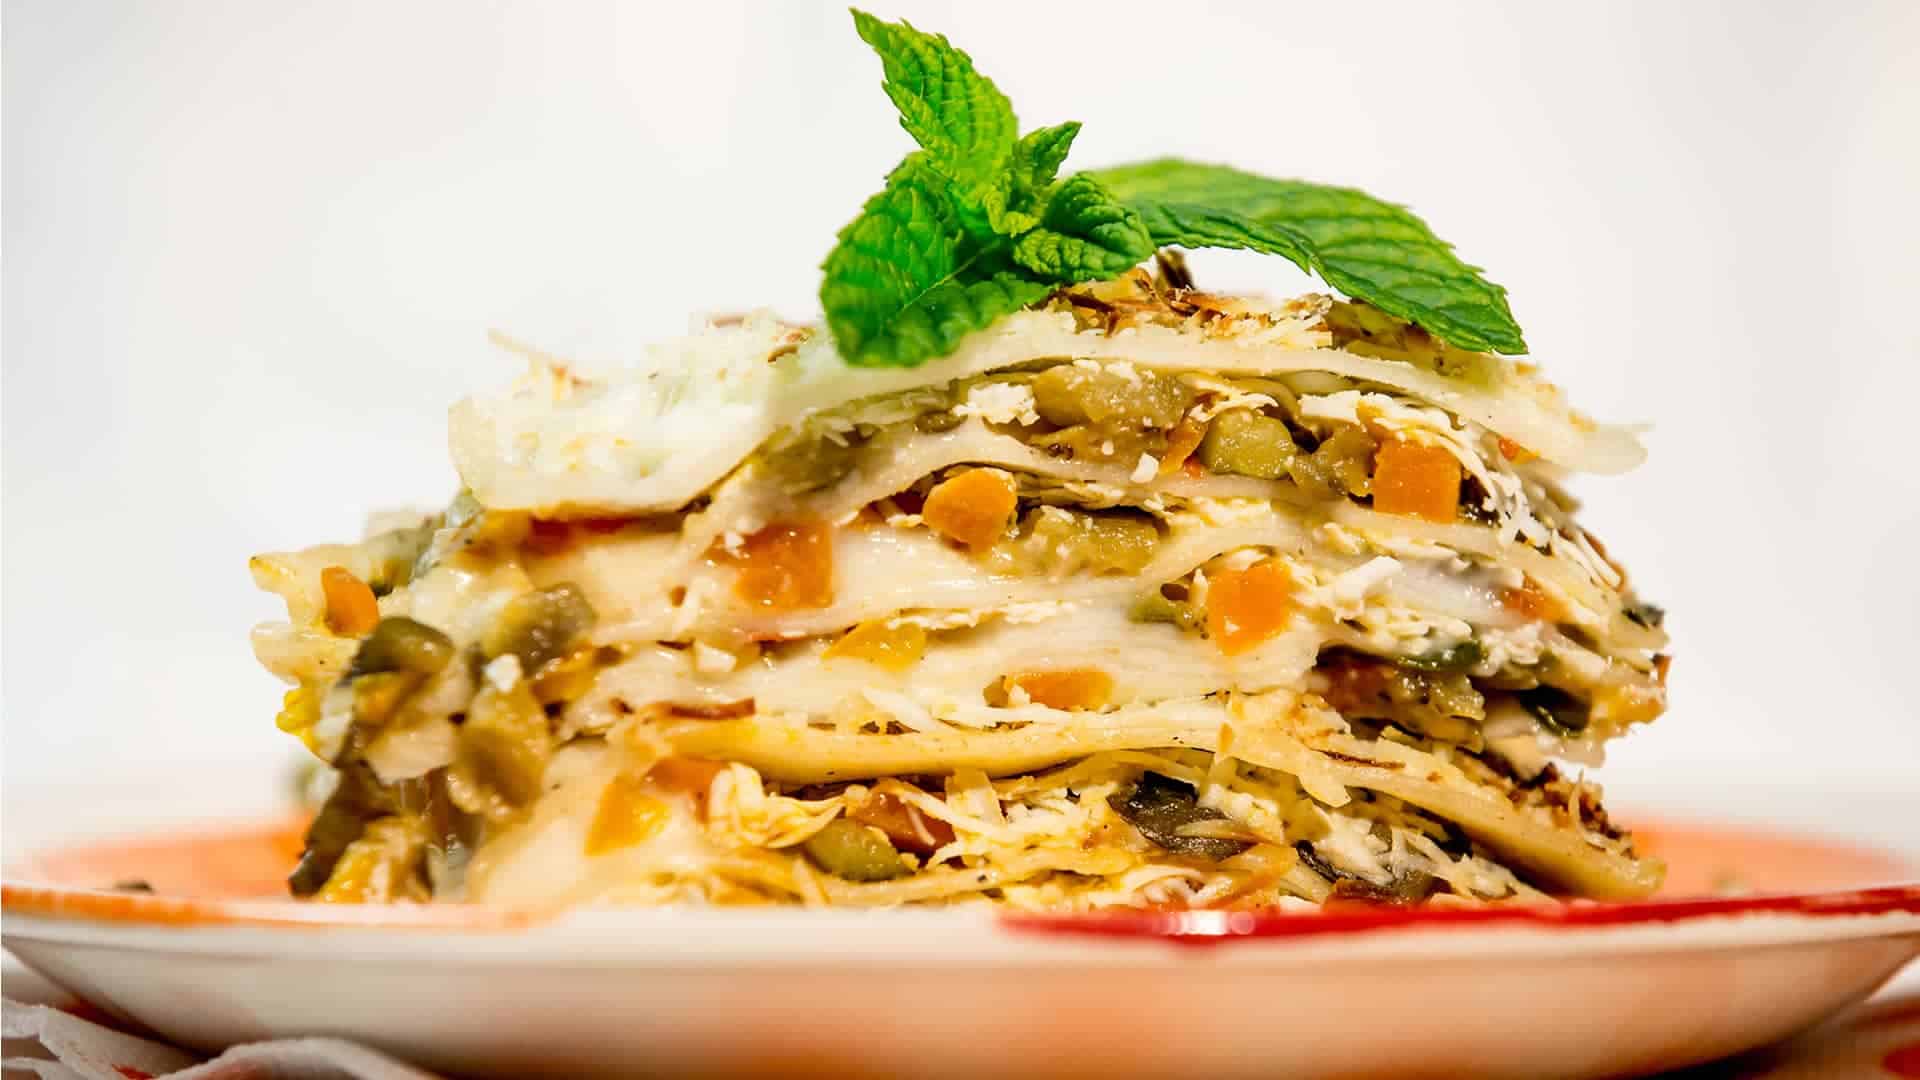 cucina sana: lasagne con verdure senza glutine 